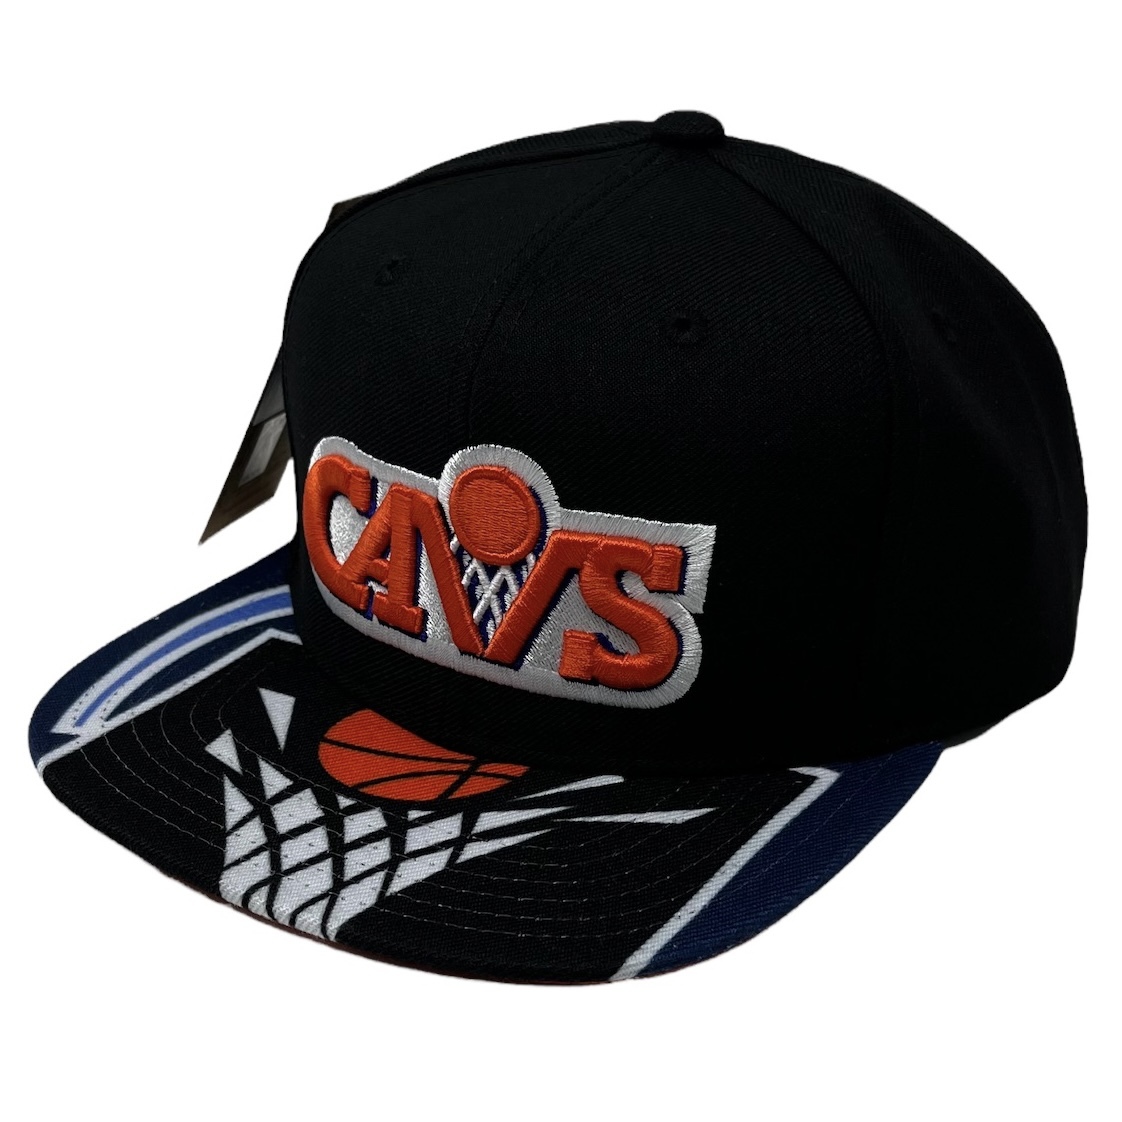 Cleveland Cavaliers Pop Mitchell & Ness Snapback Hat